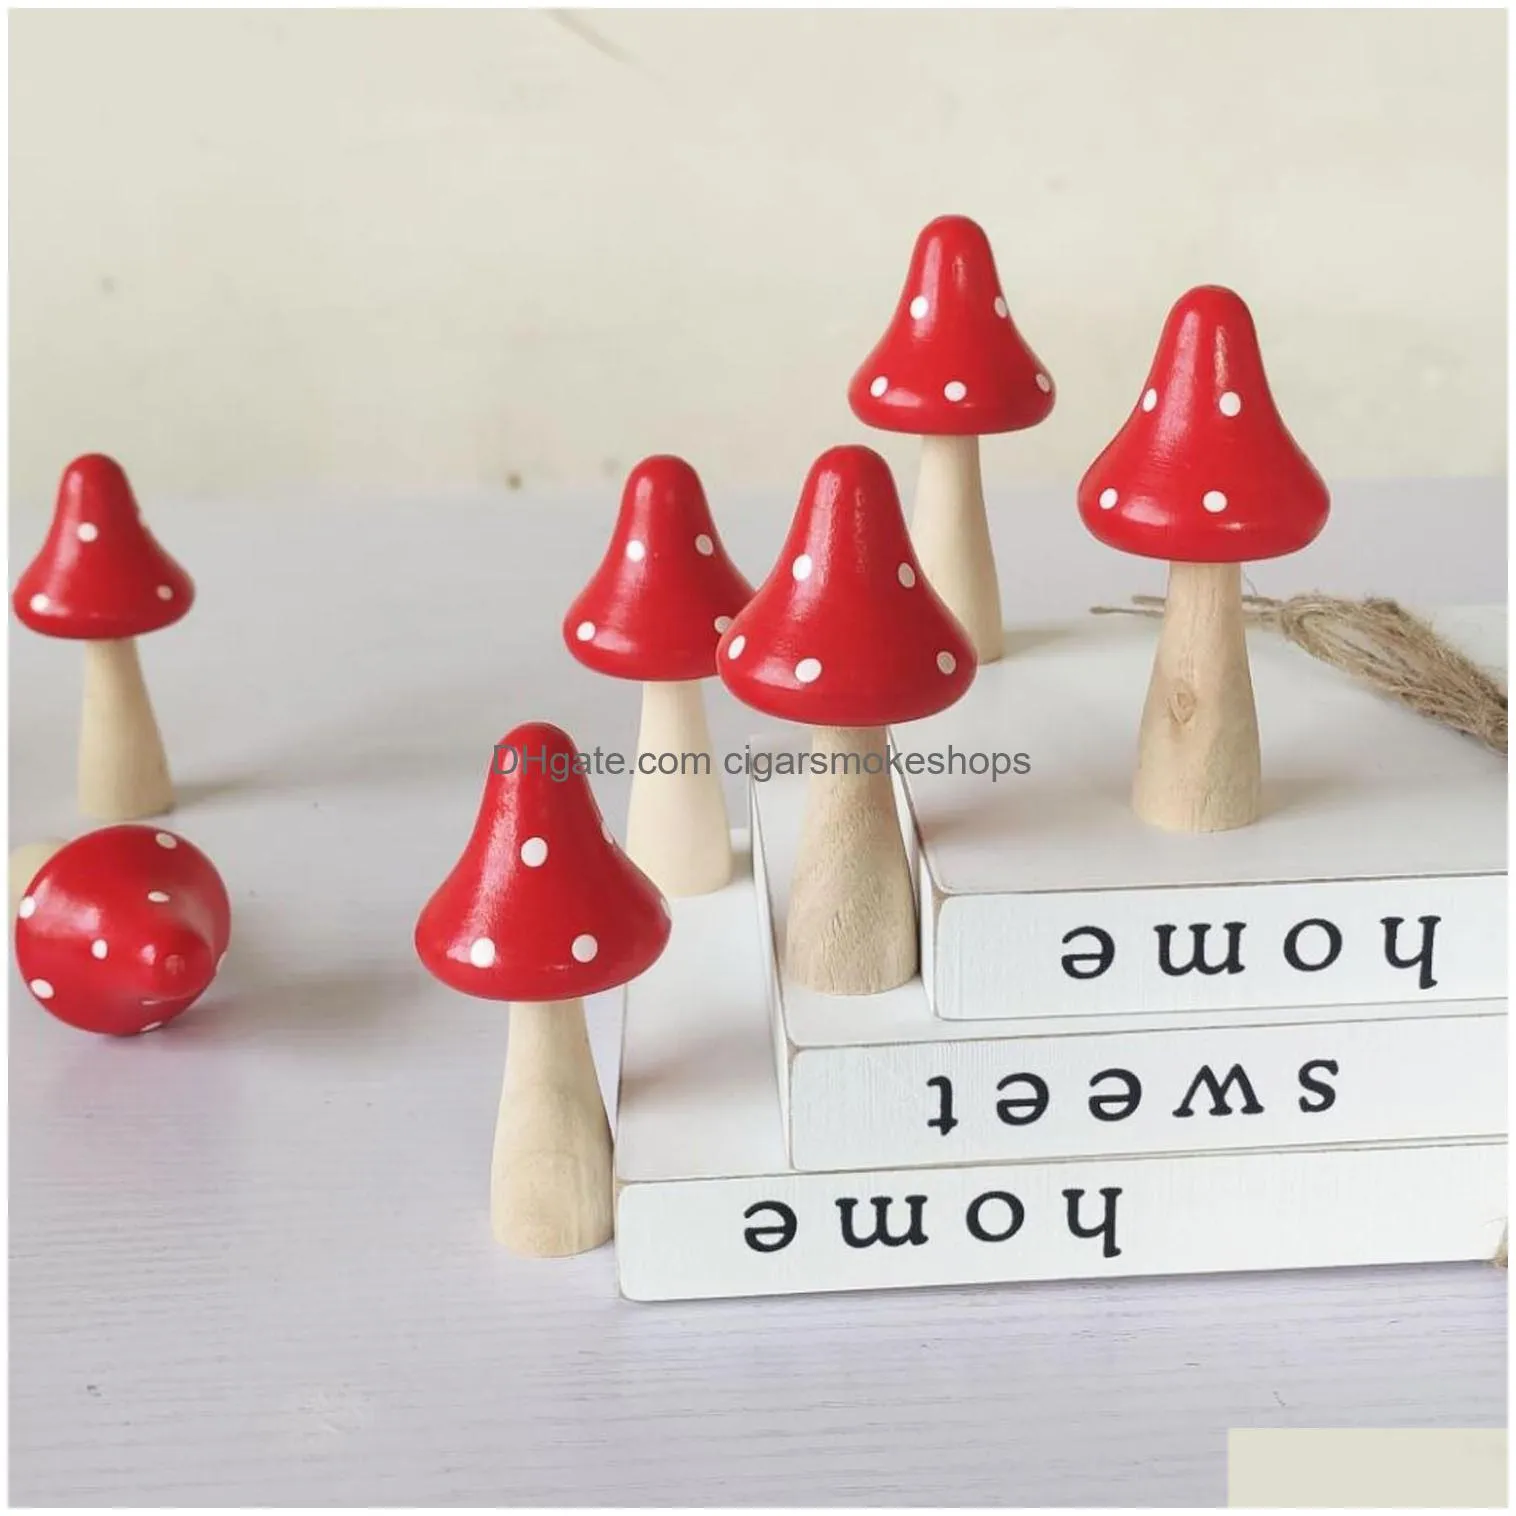 home decor mushrooms miniature figurines mini wooden fairy garden accessories flower pots micro landscape decoration kdjk2302